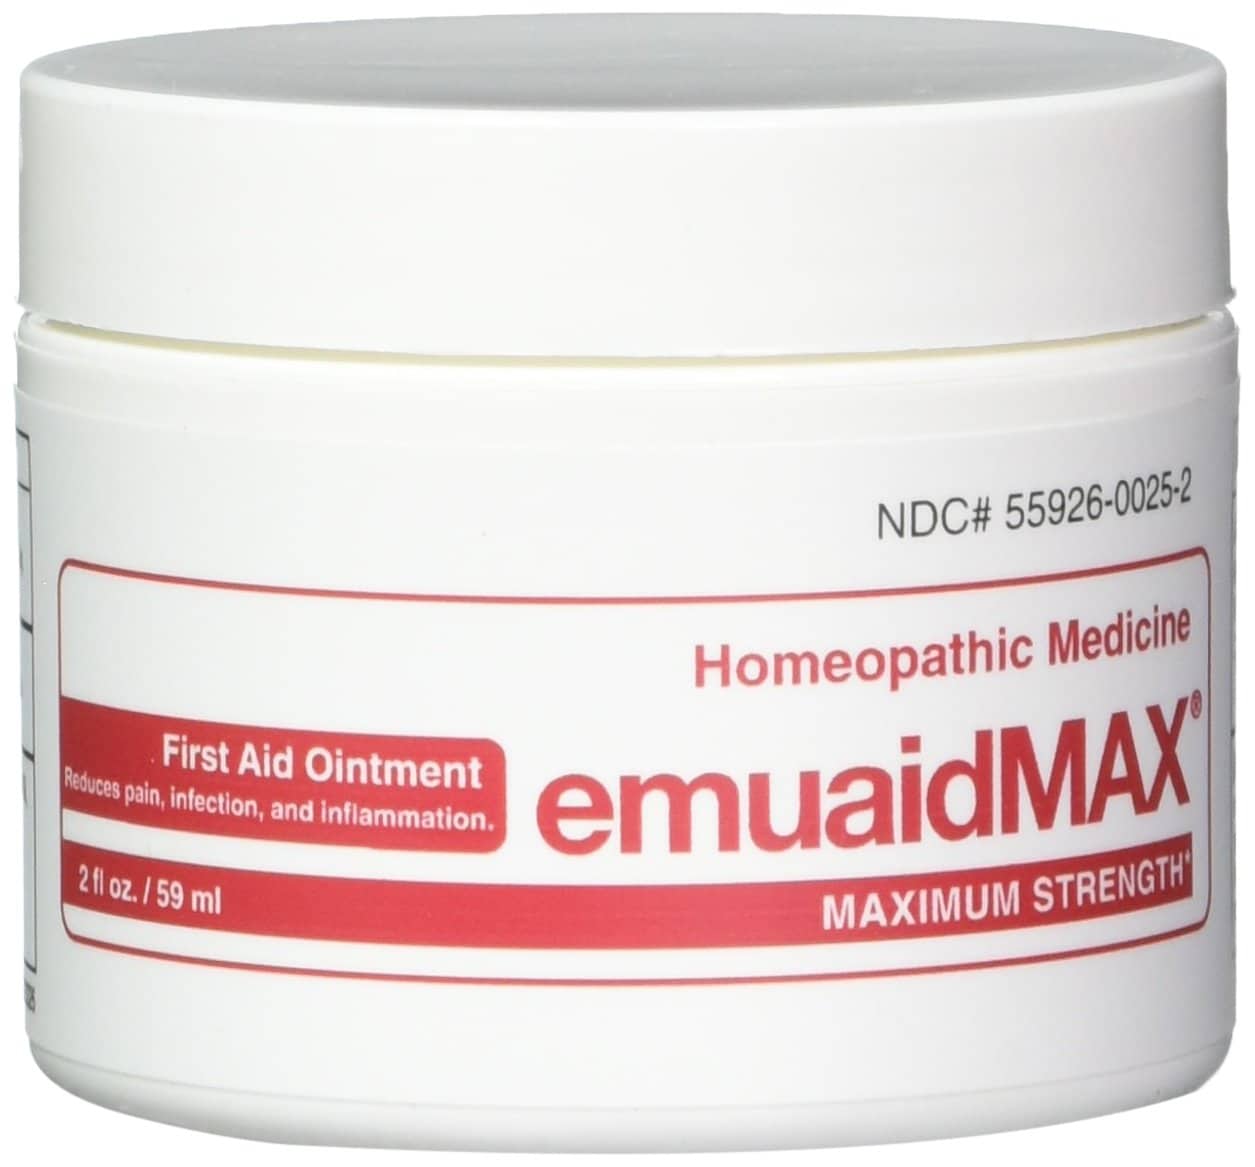 Emuaid For Hemorrhoids : Emuaid First Aid Ointment, 2 fl oz Ingredients ...